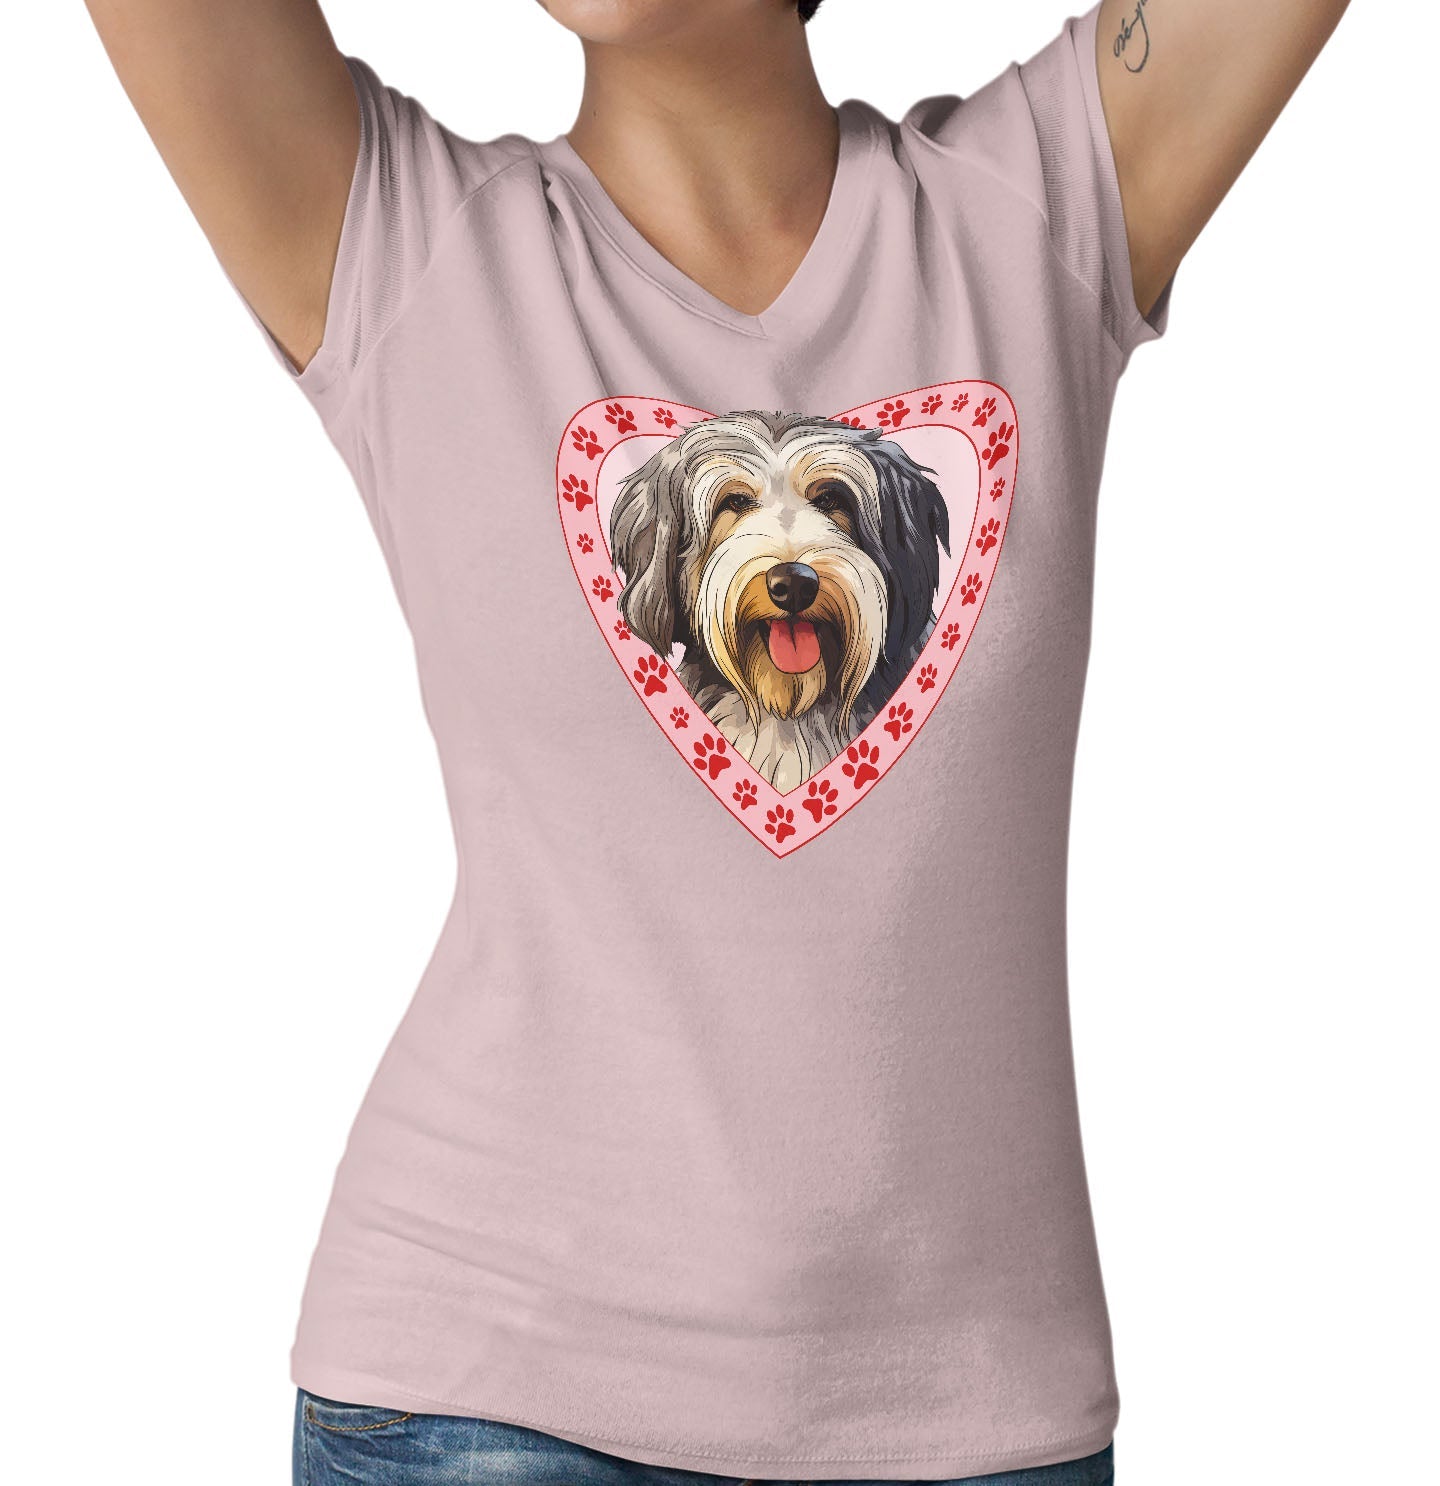 Old English Sheepdog Illustration In Heart - Women's V-Neck T-Shirt